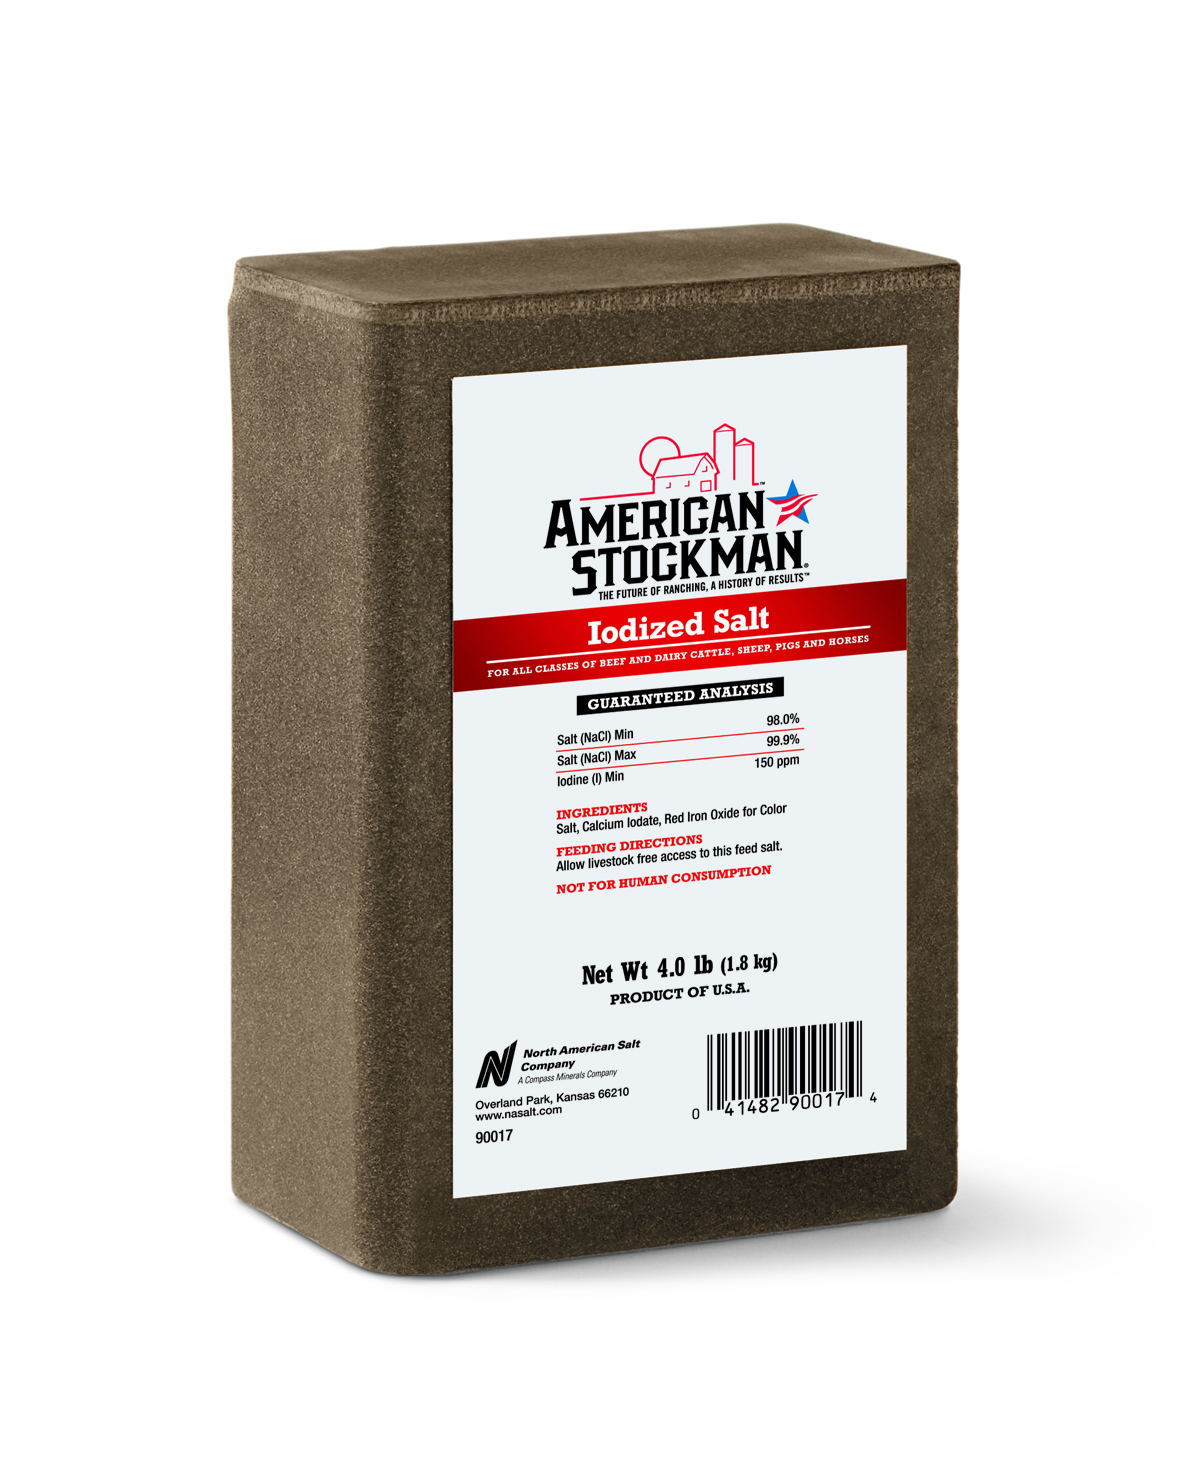 American Stockman® Iodized Salt 4 lb.